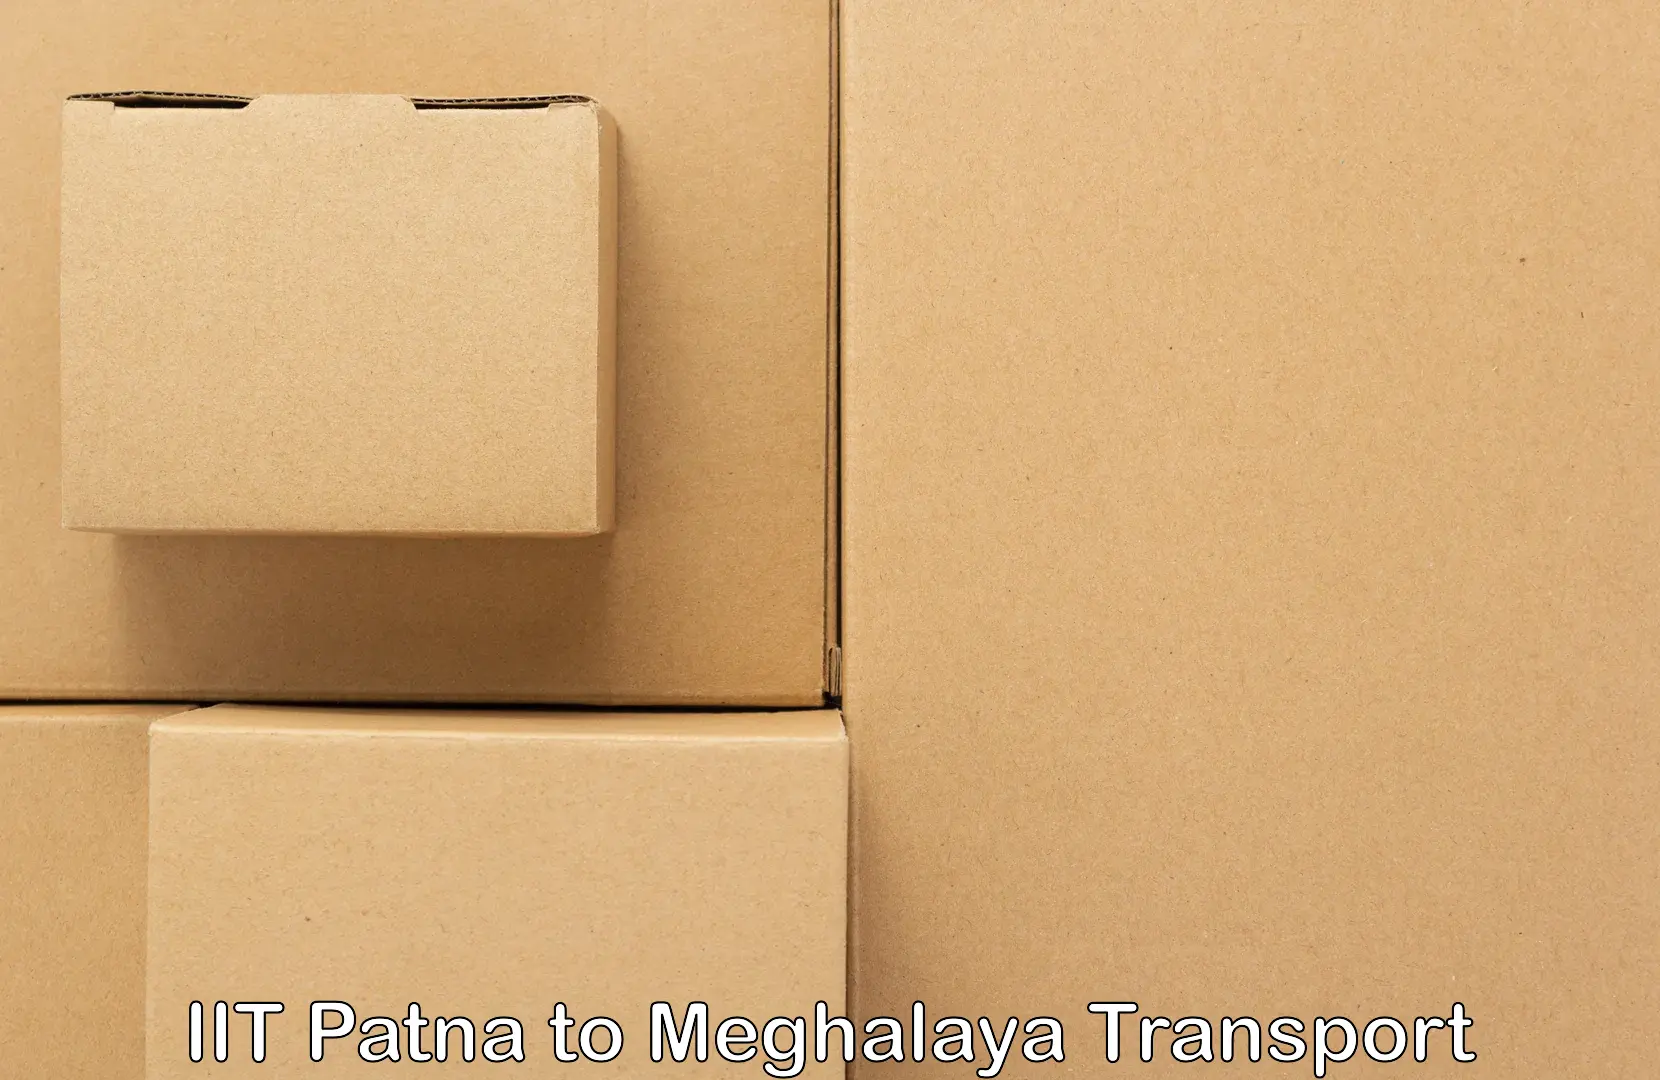 Shipping partner IIT Patna to Meghalaya